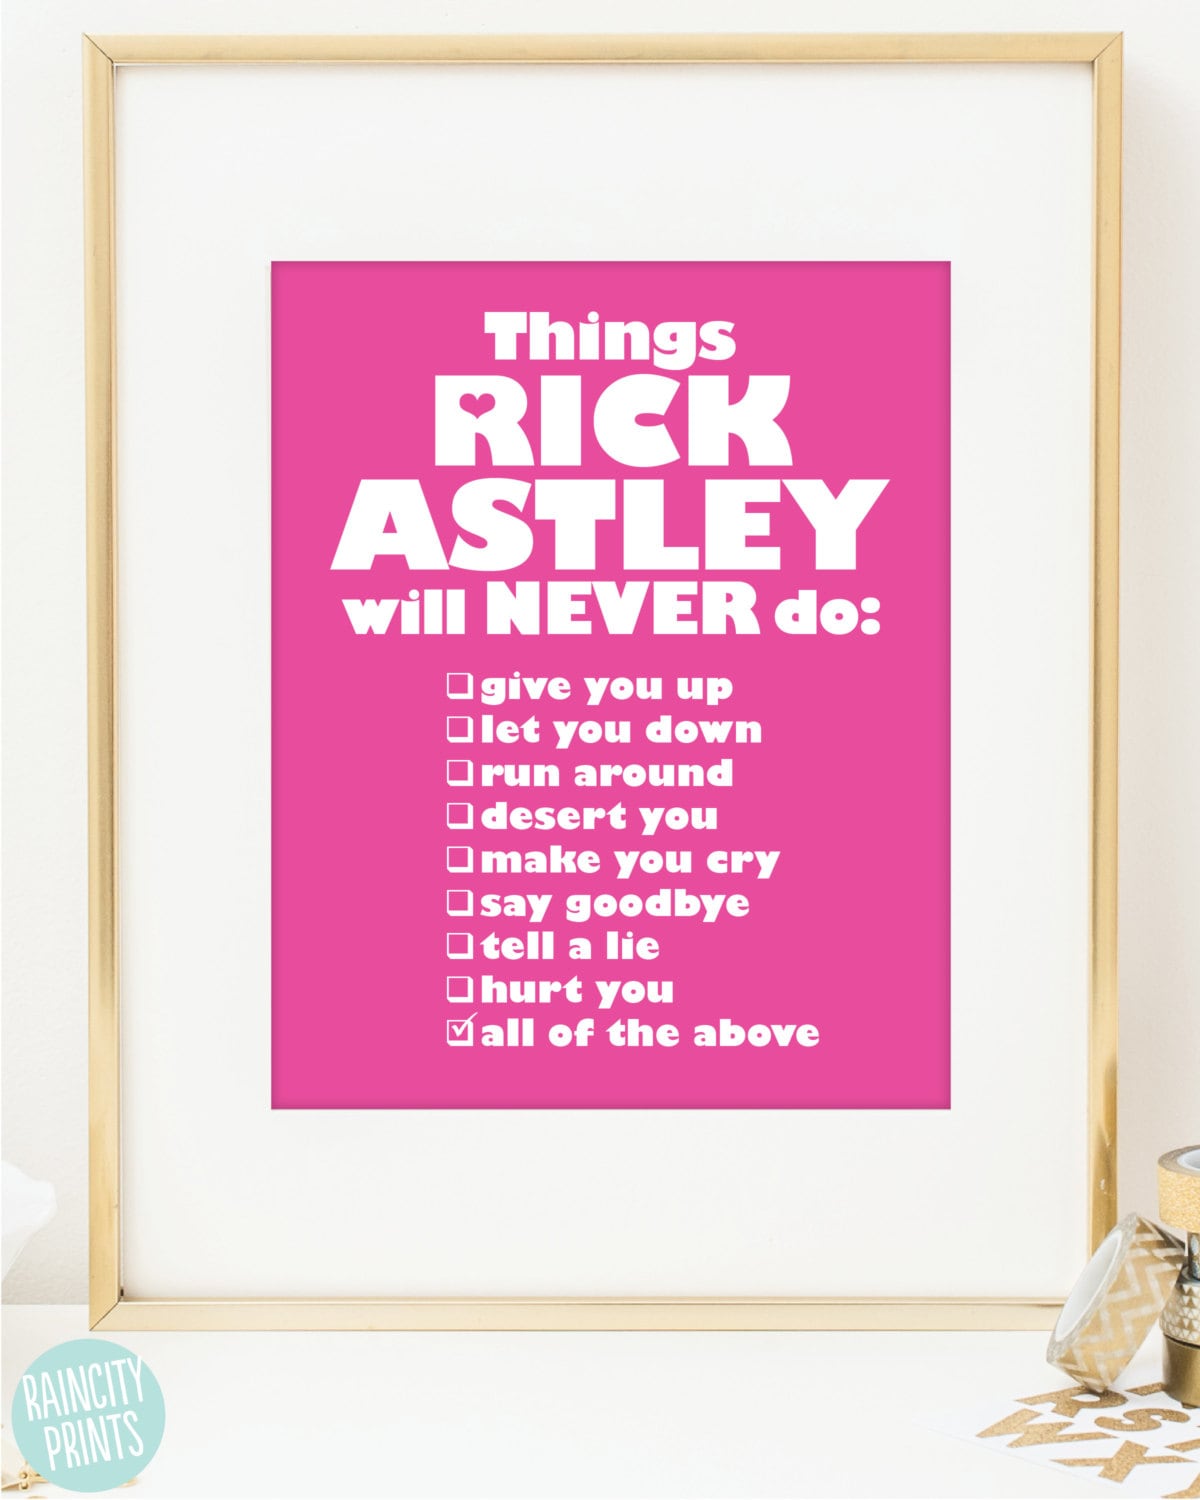 Funny Valentine's Day Card Rick Astley Rick Roll Rick -  New Zealand